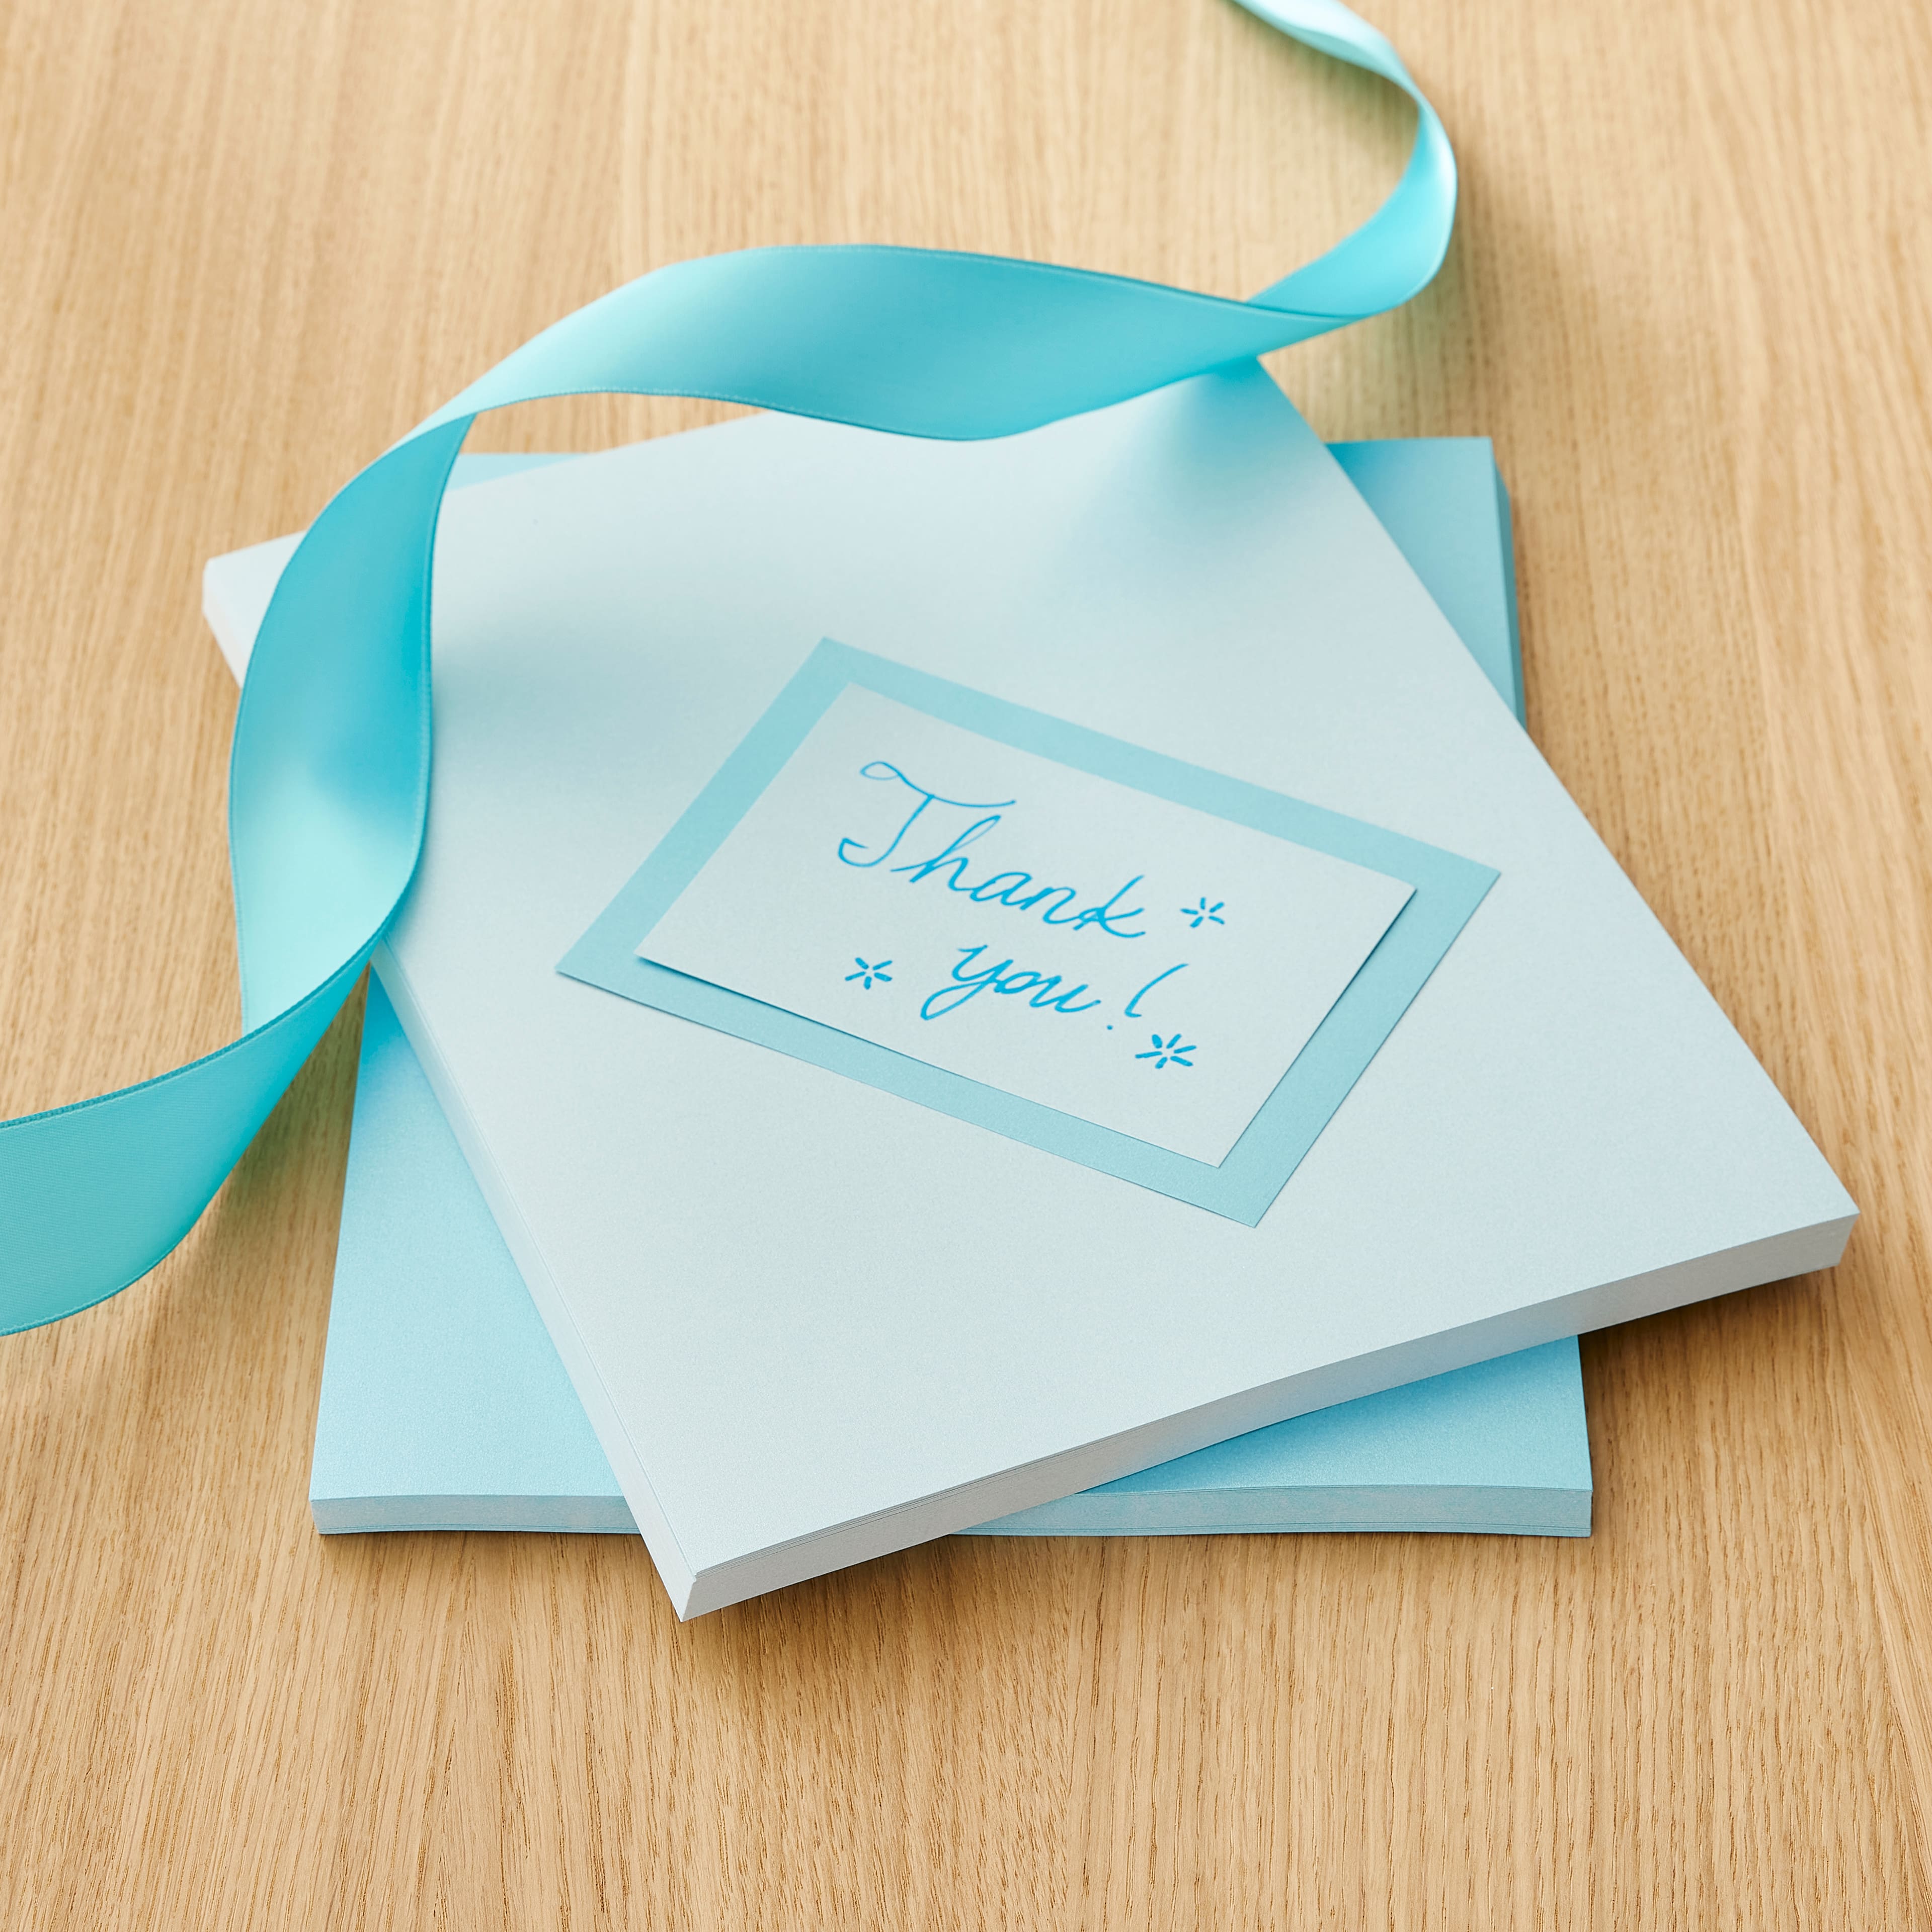 100 Sheets Light Blue Cardstock 8.5 x 11 Pastel Paper, Goefun Blue Card  Stock Printer Paper for Wedding Invitations, Menus, Crafts, DIY Cards